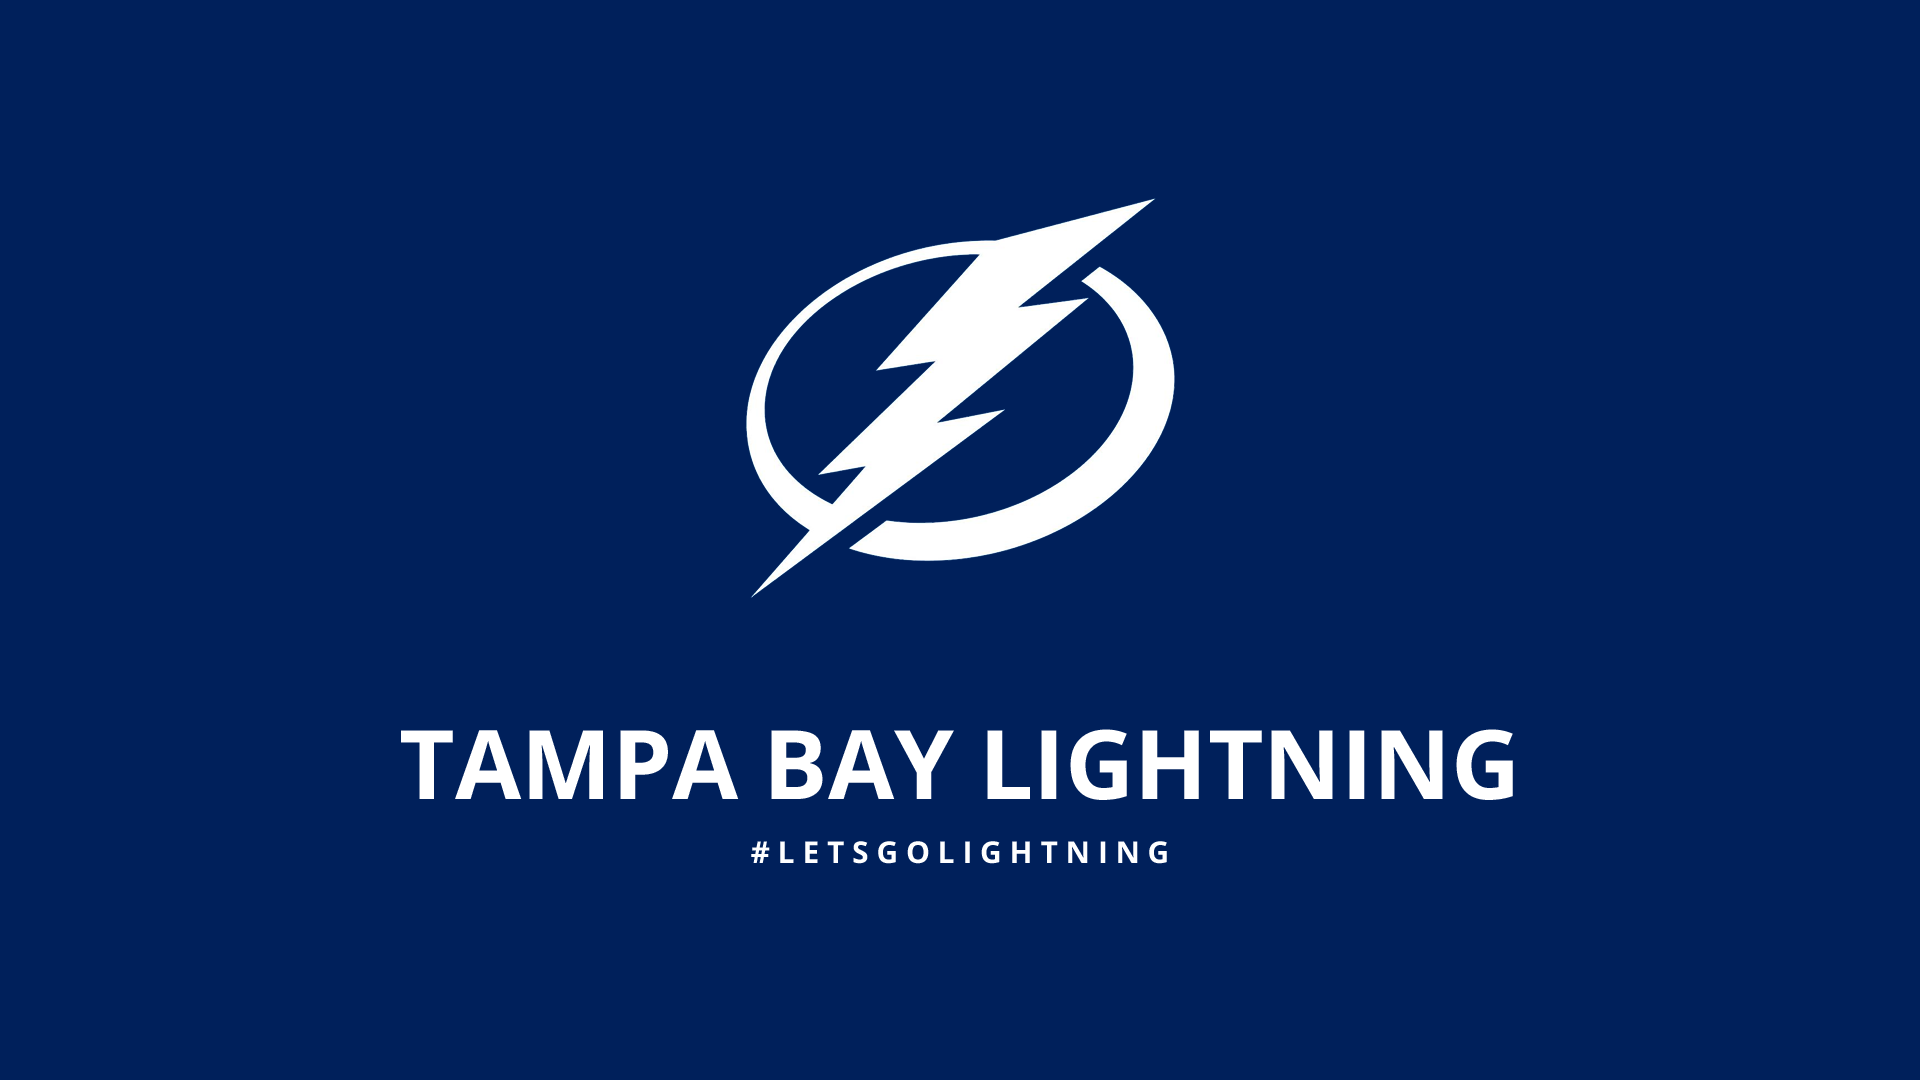 Minimalist Tampa Bay Lightning wallpaper by lfiore